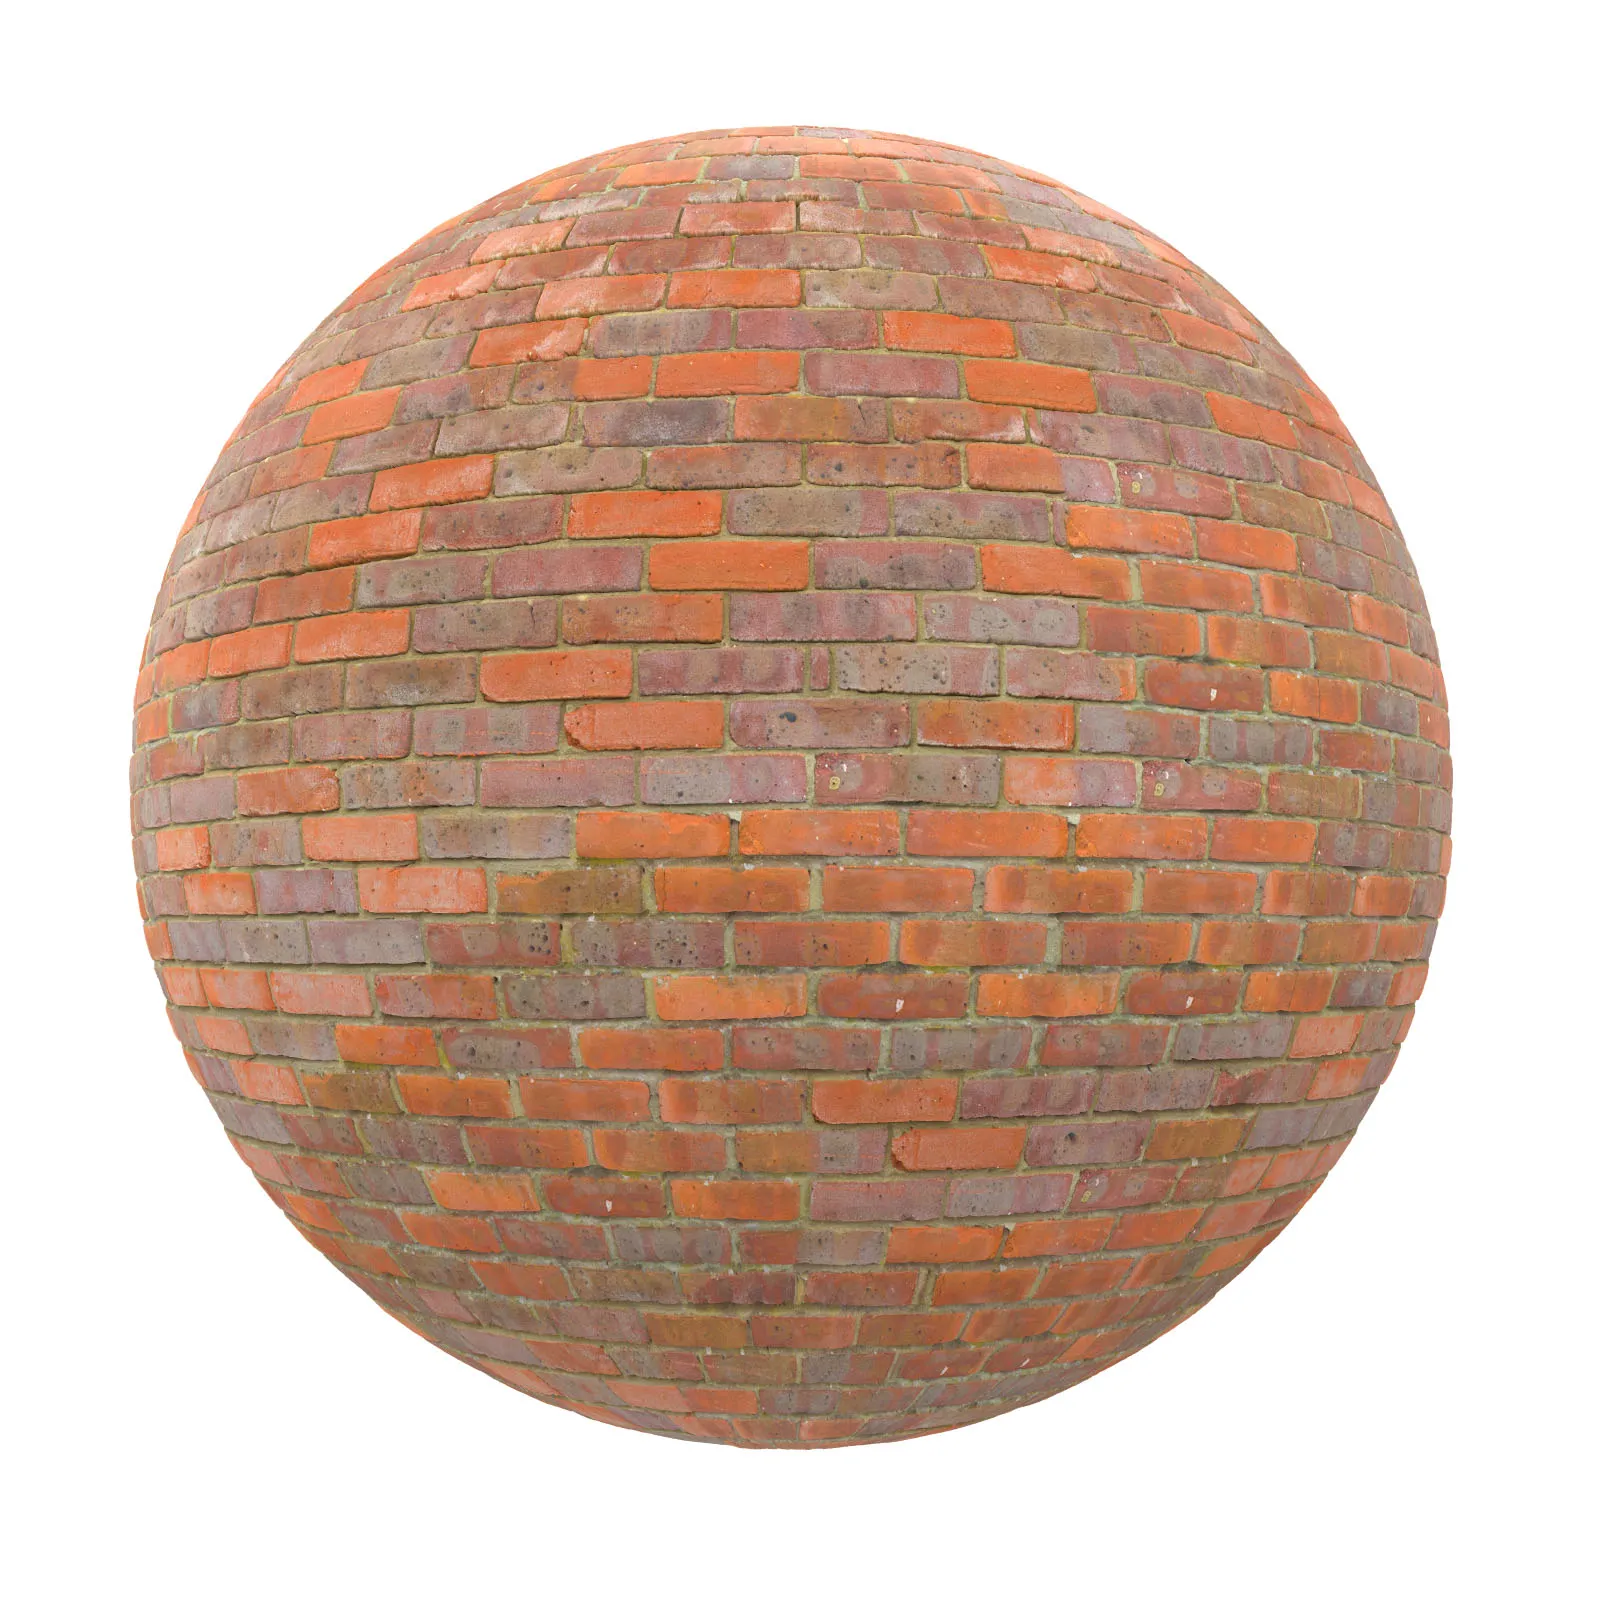 PBR CGAXIS TEXTURES – BRICK – Red Brick Wall 14